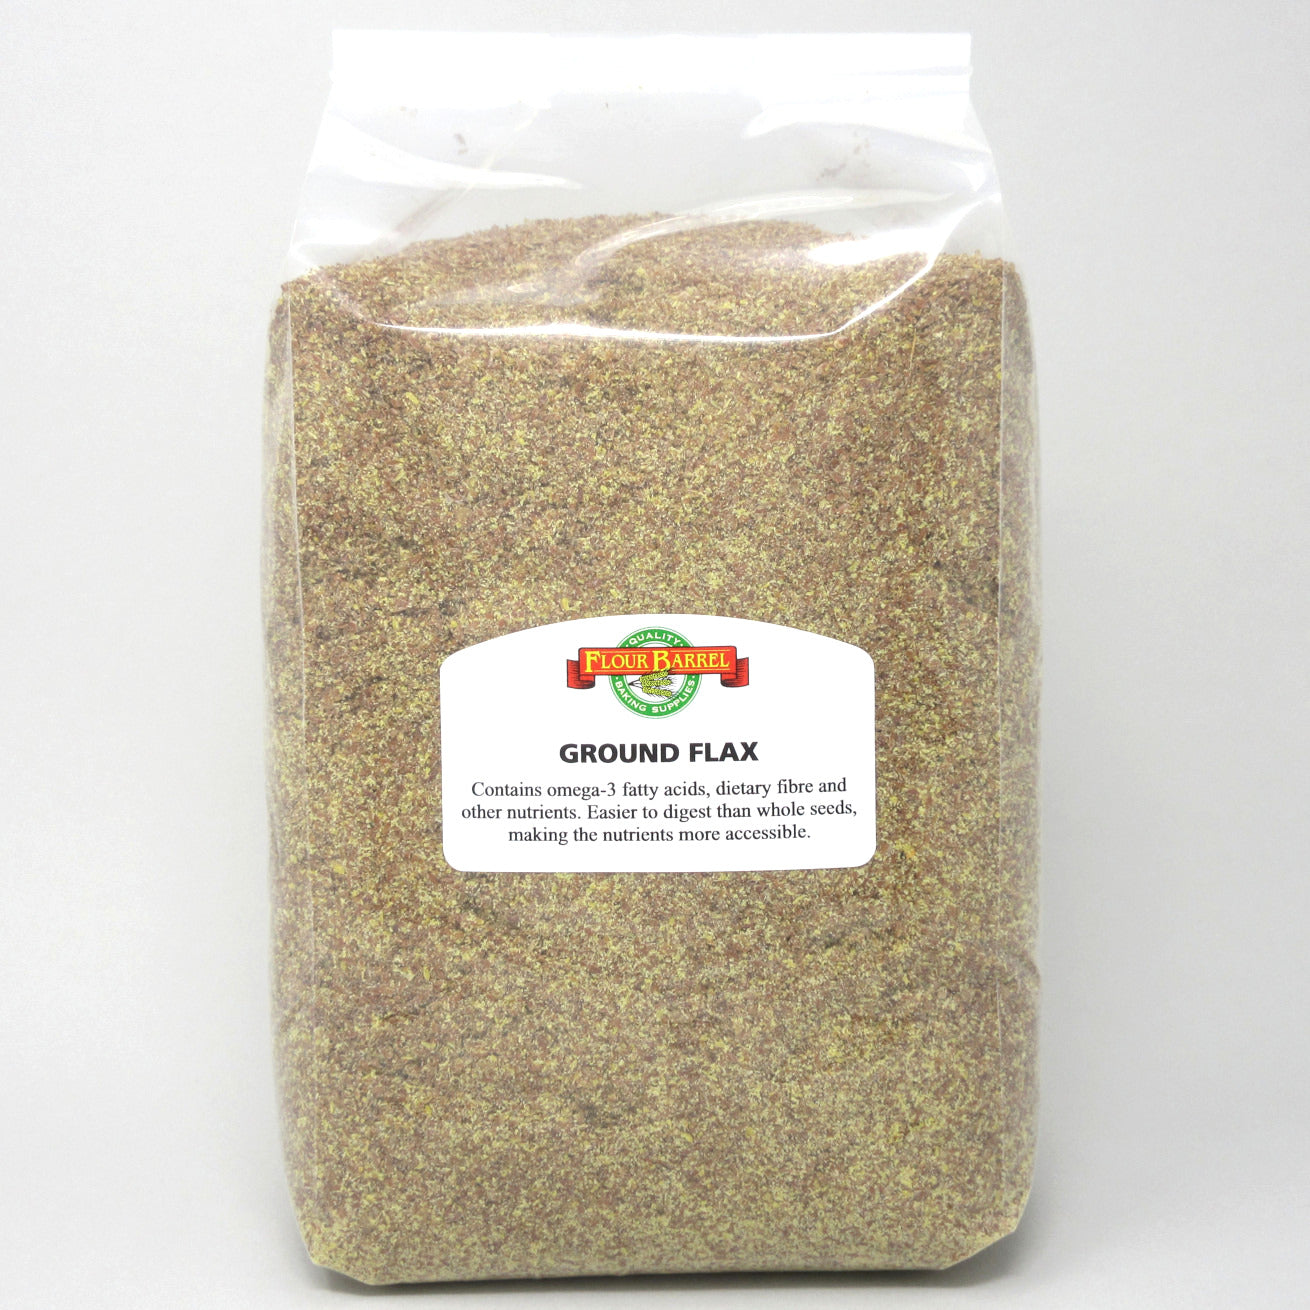 Flour Barrel product image - Ground Flax